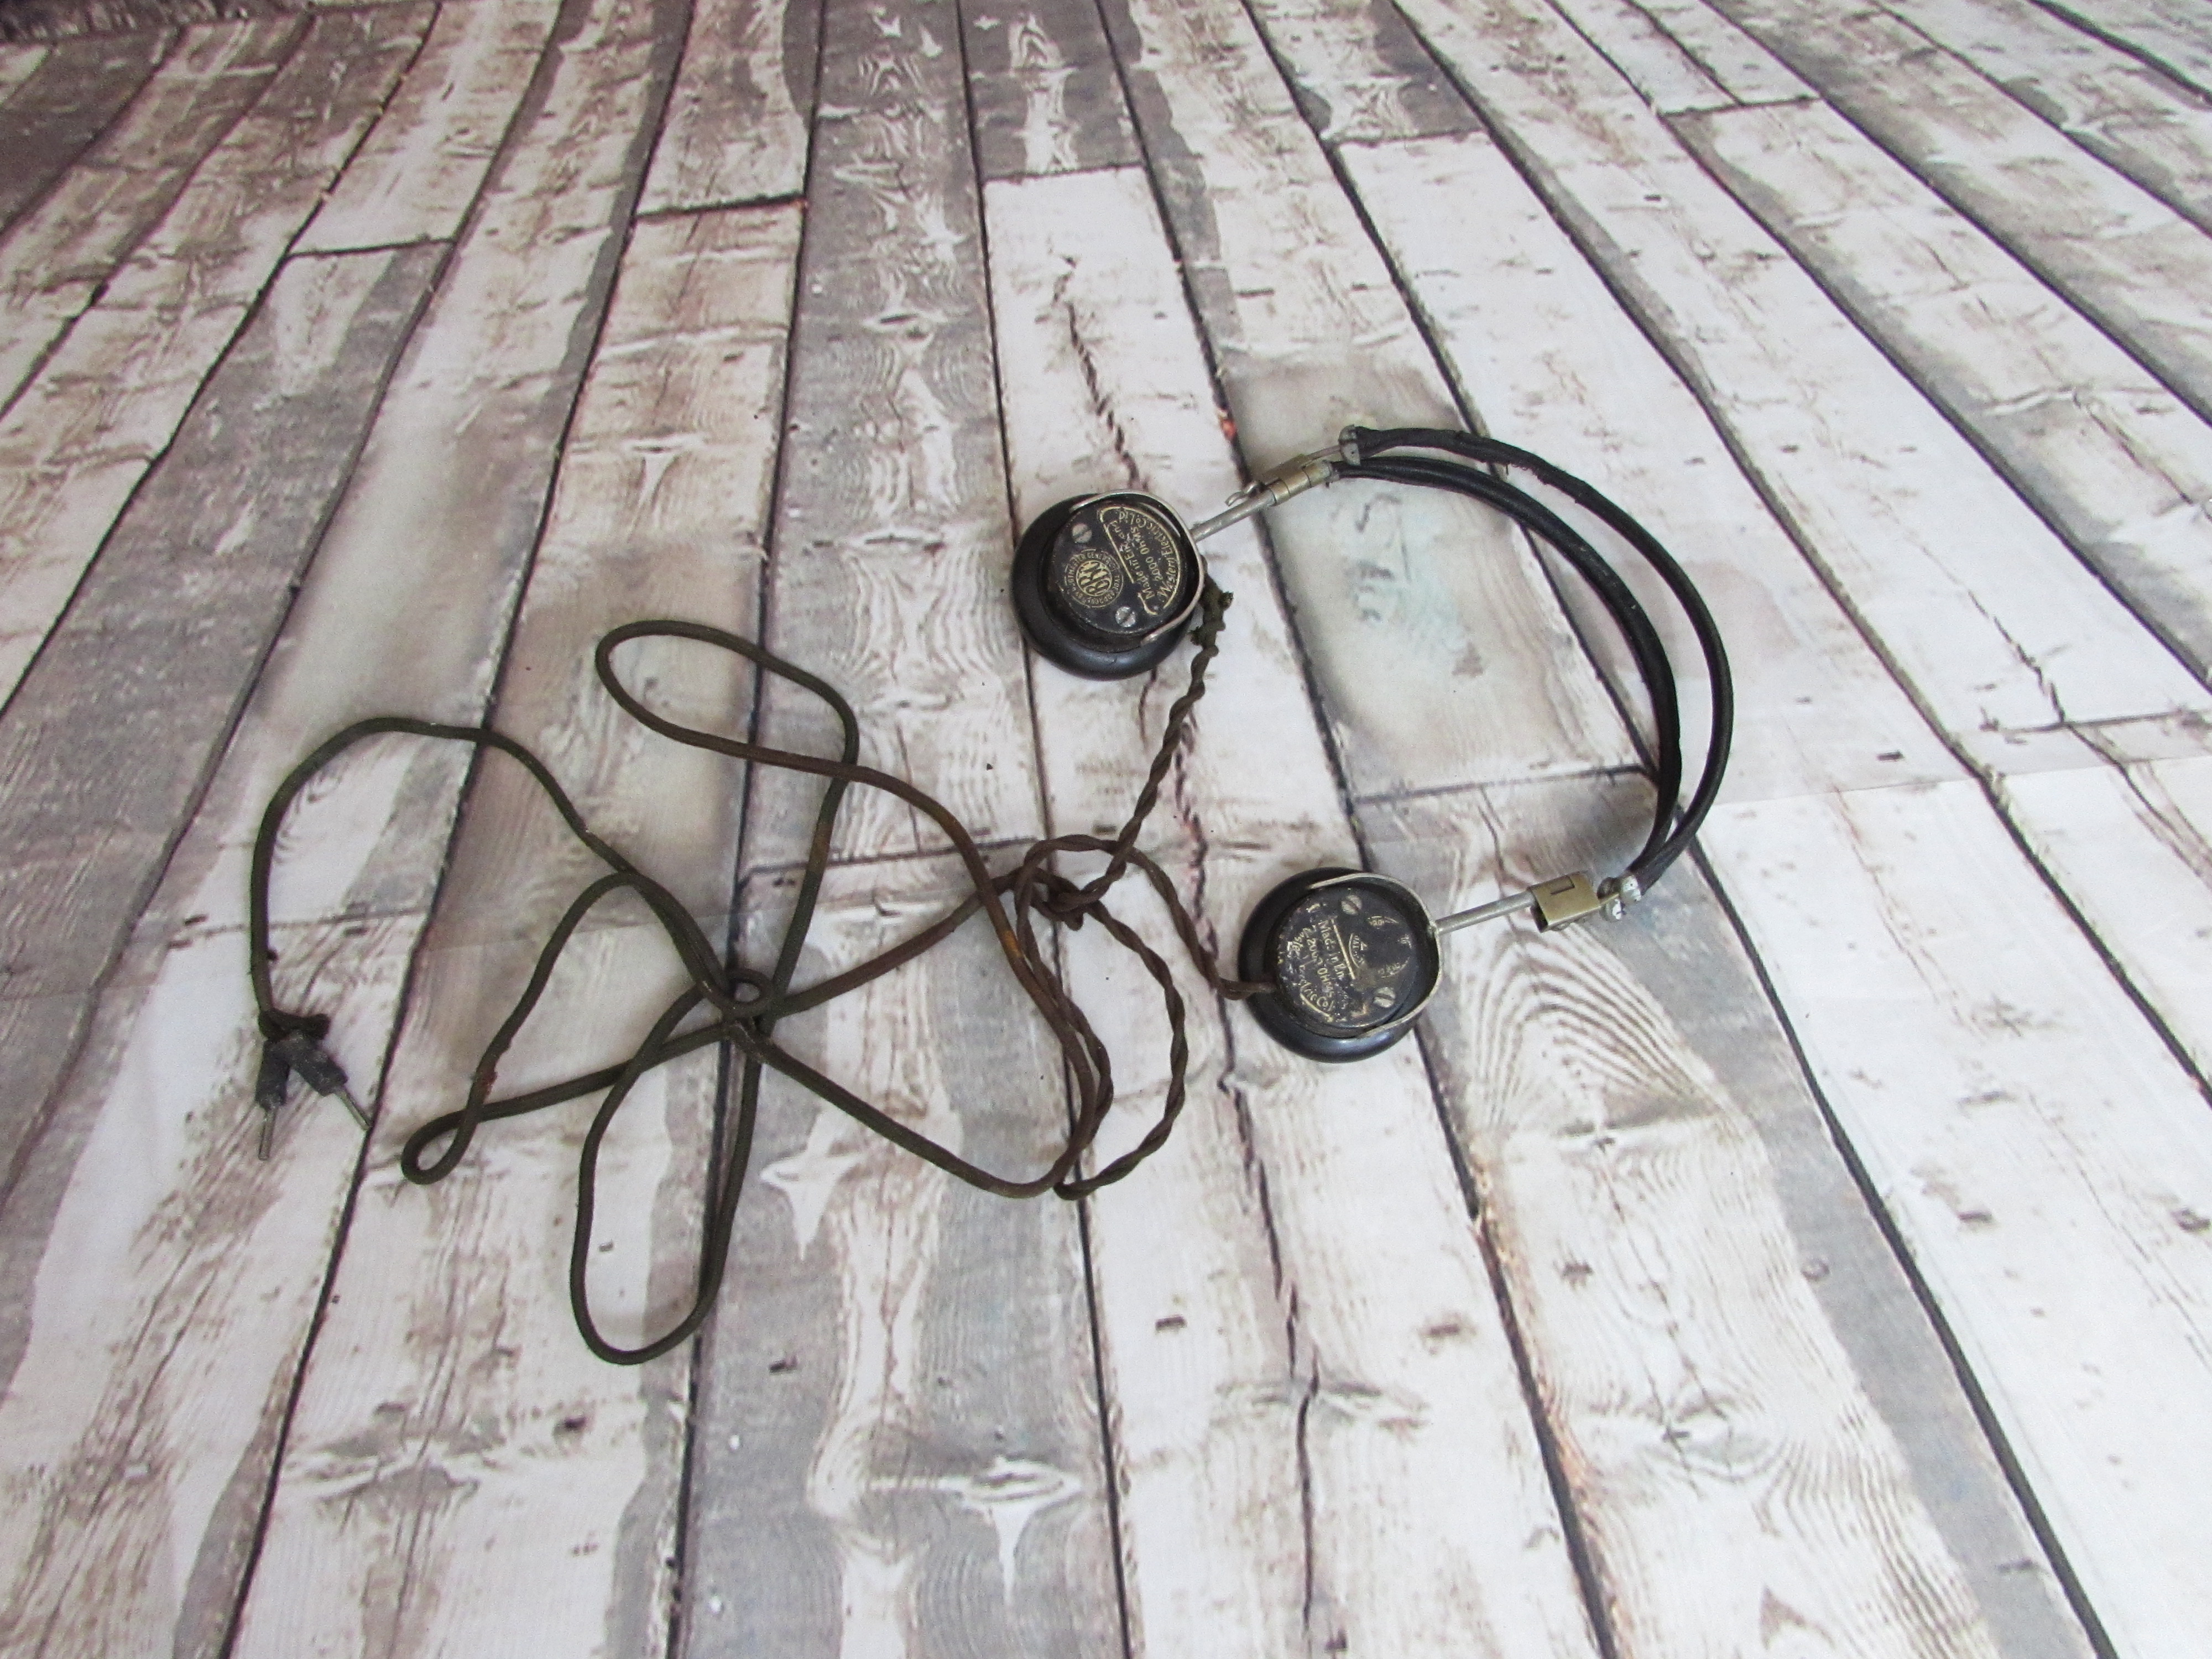 Pair of old BBC earphones